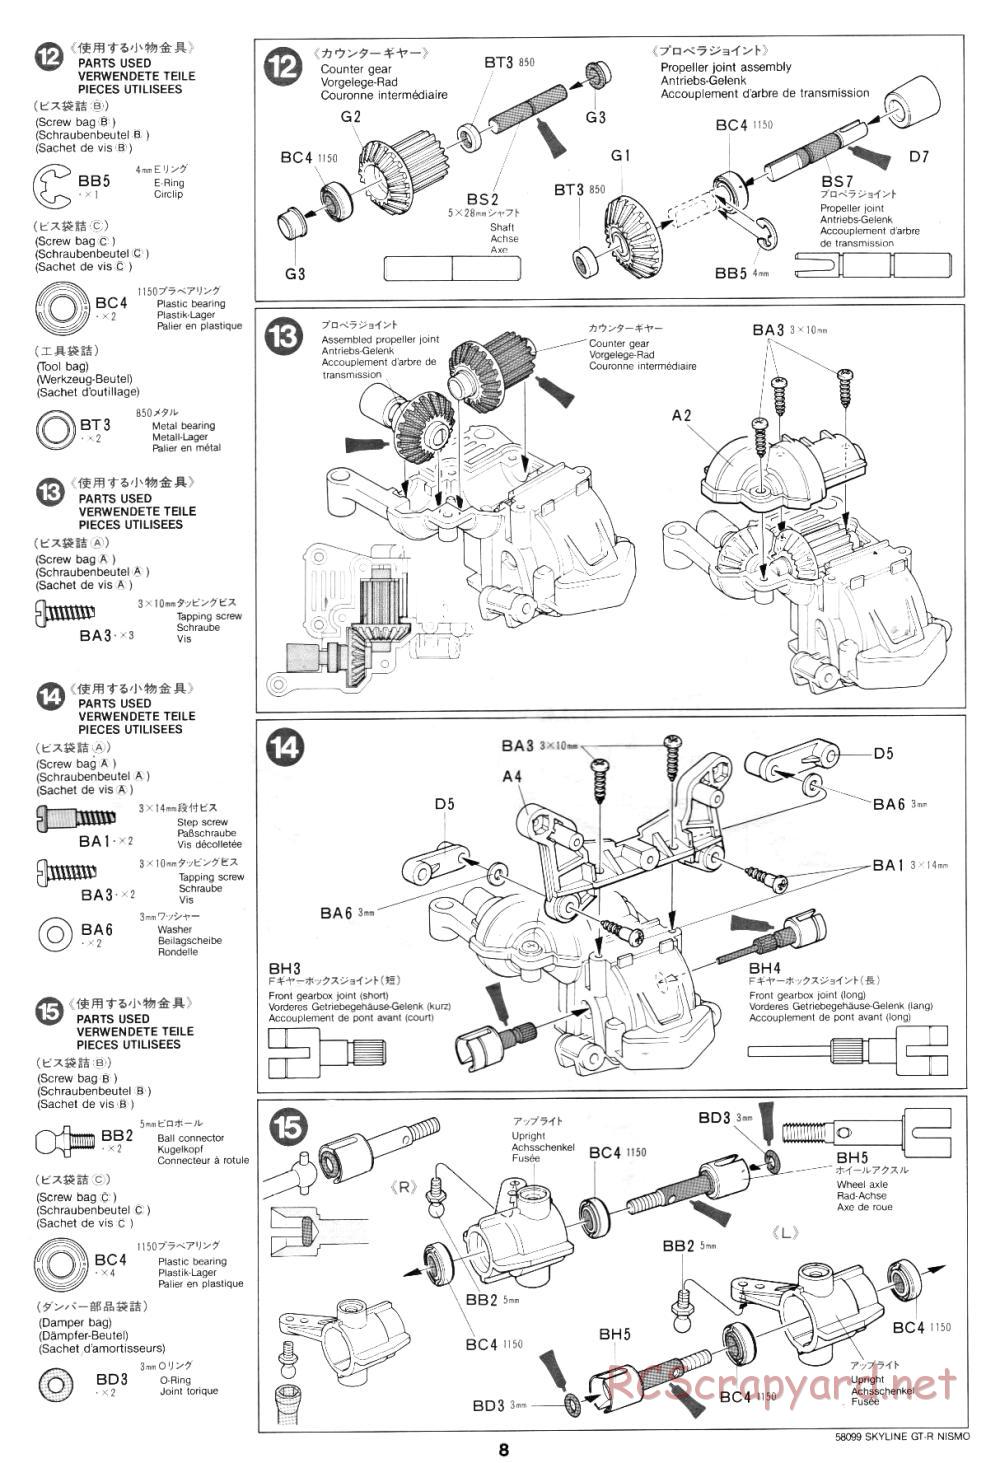 Tamiya - Nissan Skyline GT-R Nismo - 58099 - Manual - Page 8